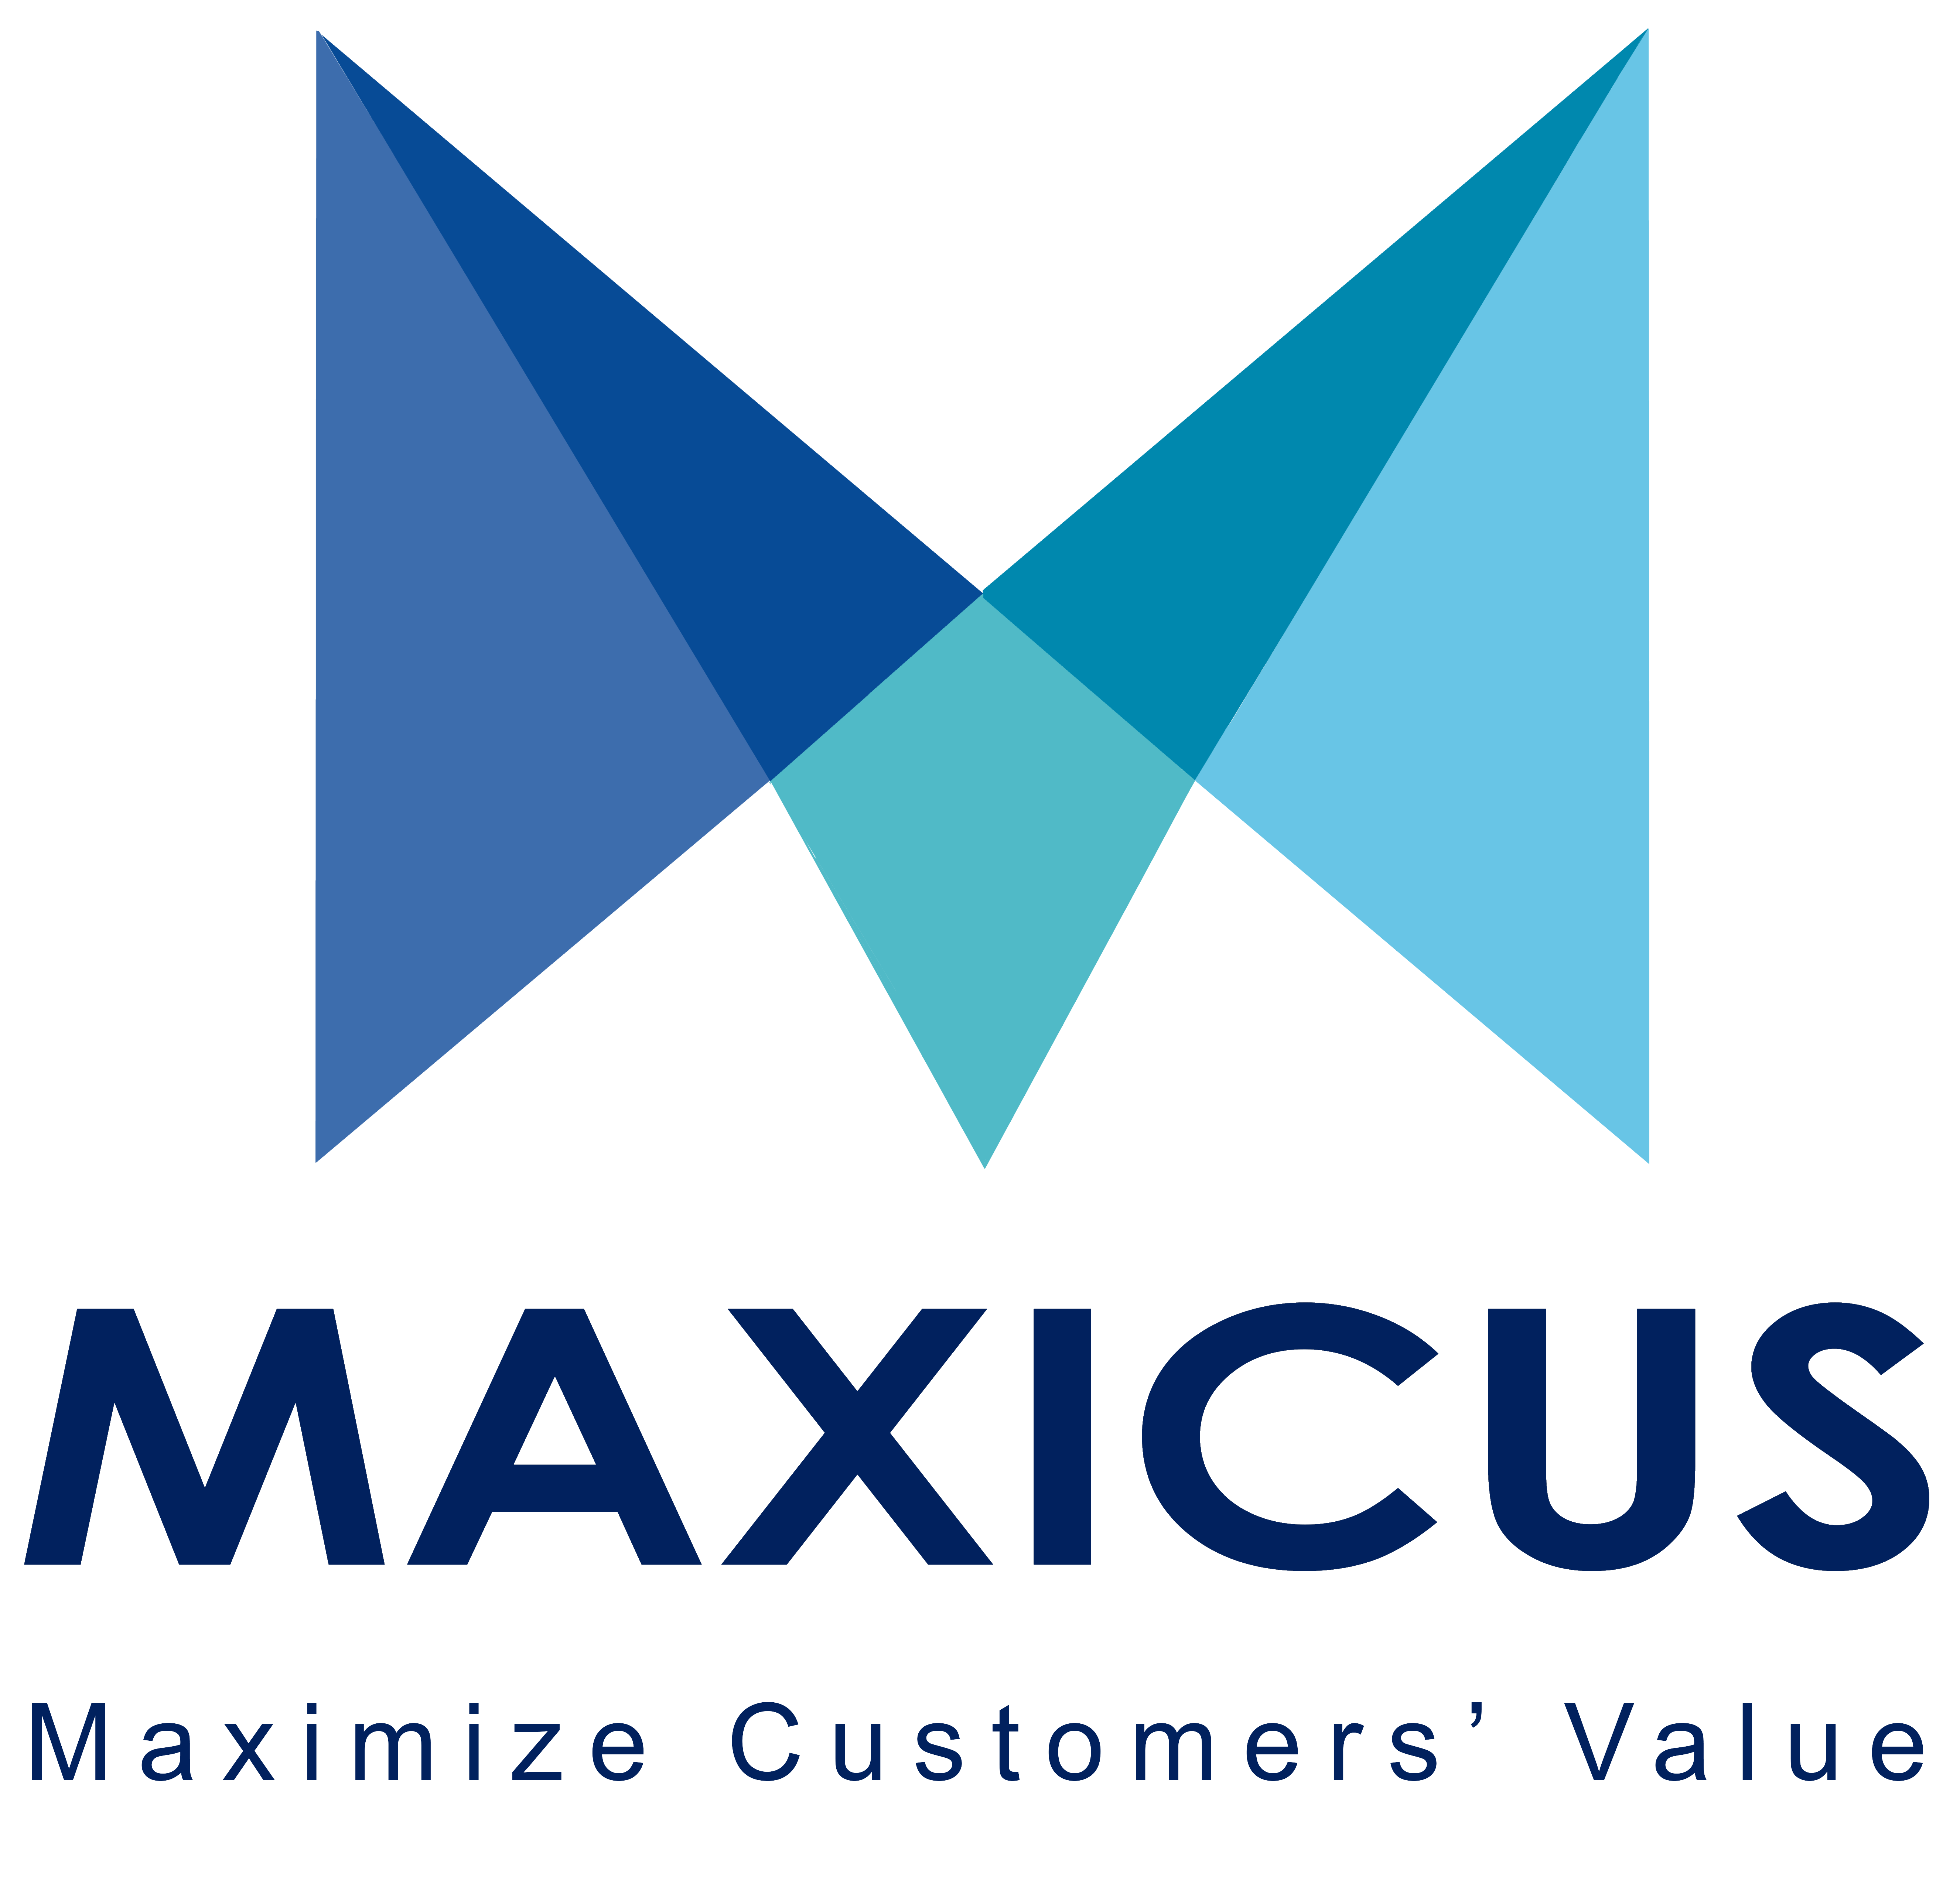 Maxicus